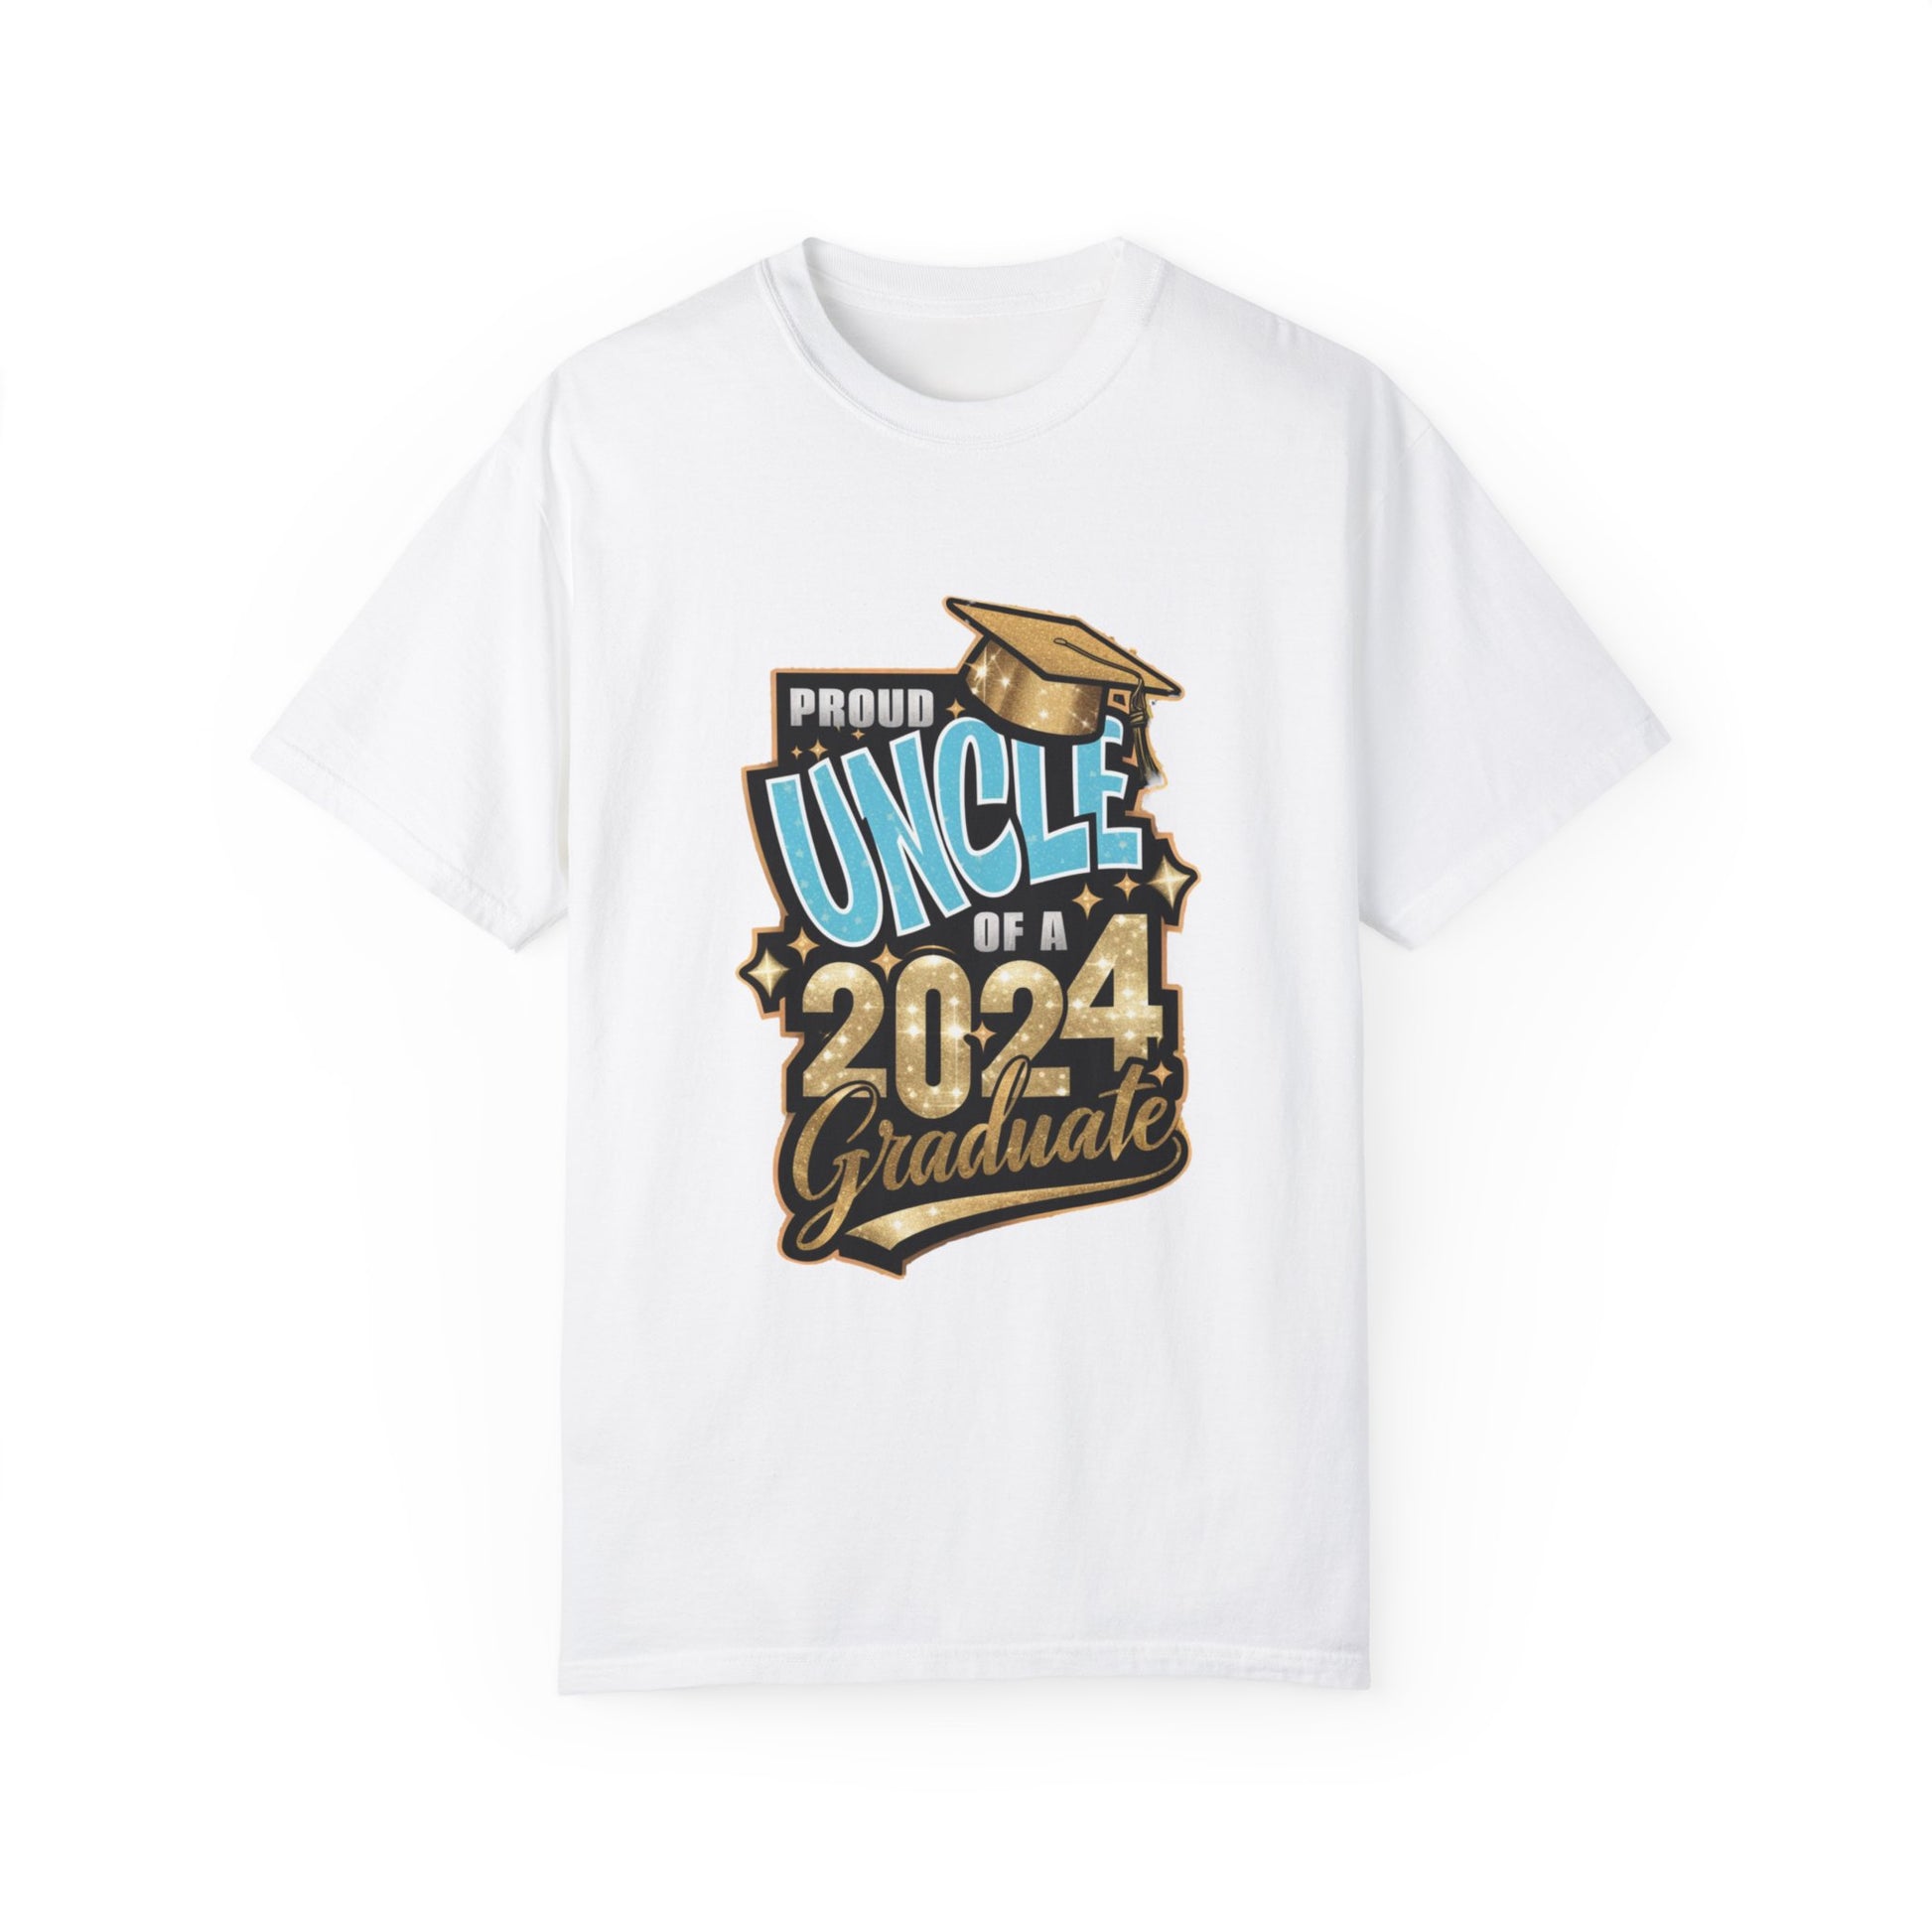 Proud Uncle of a 2024 Graduate Unisex Garment-dyed T-shirt Cotton Funny Humorous Graphic Soft Premium Unisex Men Women White T-shirt Birthday Gift-3